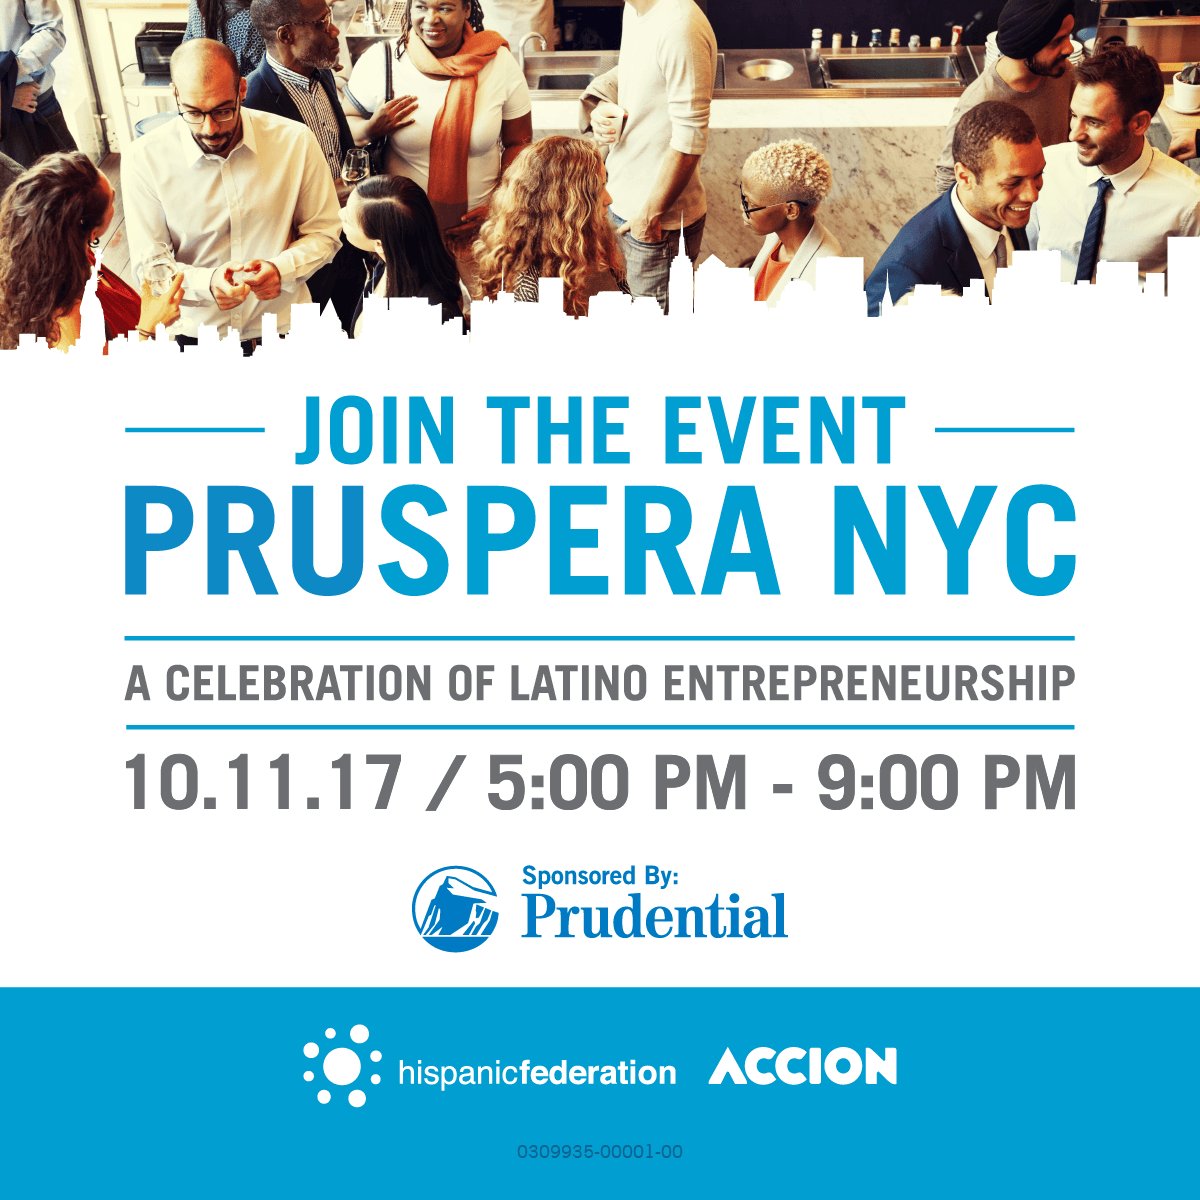 You are invited > #PrusperaNYC A Celebration of #LatinoEntrepreneurship RSVP  prusperanyc.splashthat.com #Prupárate #ad @dimemedia @Prudential